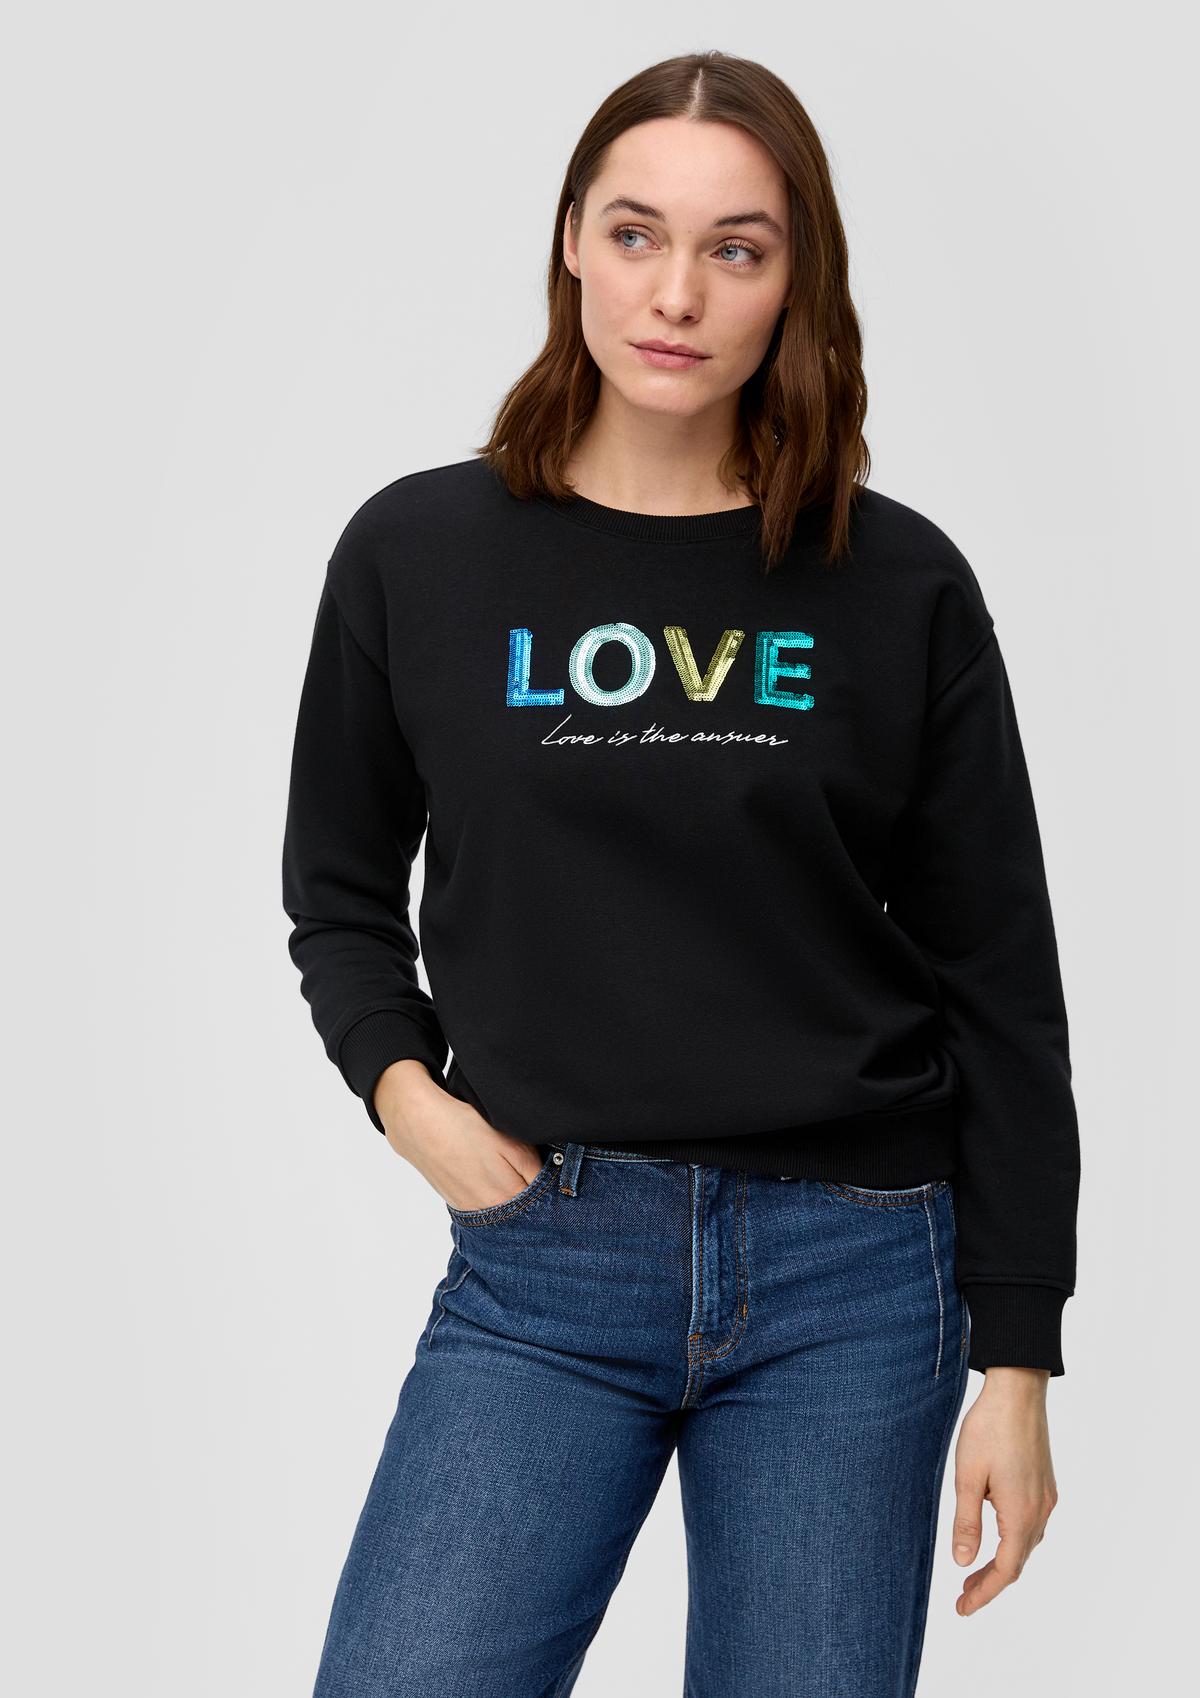 for Sweatshirts Women